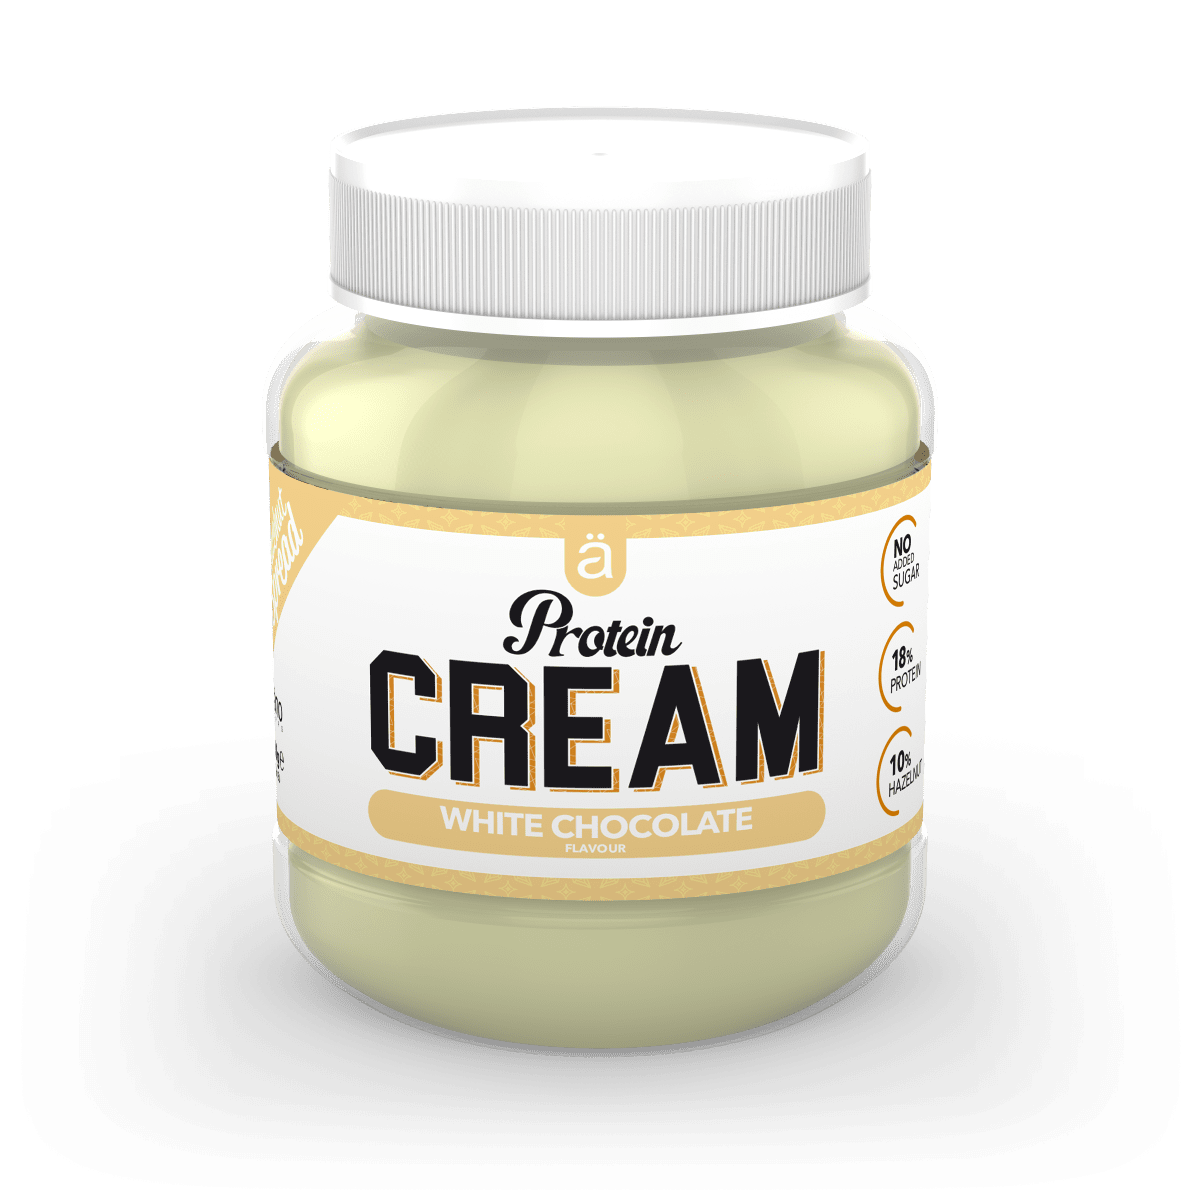 Protein Cream White Chocolate - 400g - NANO